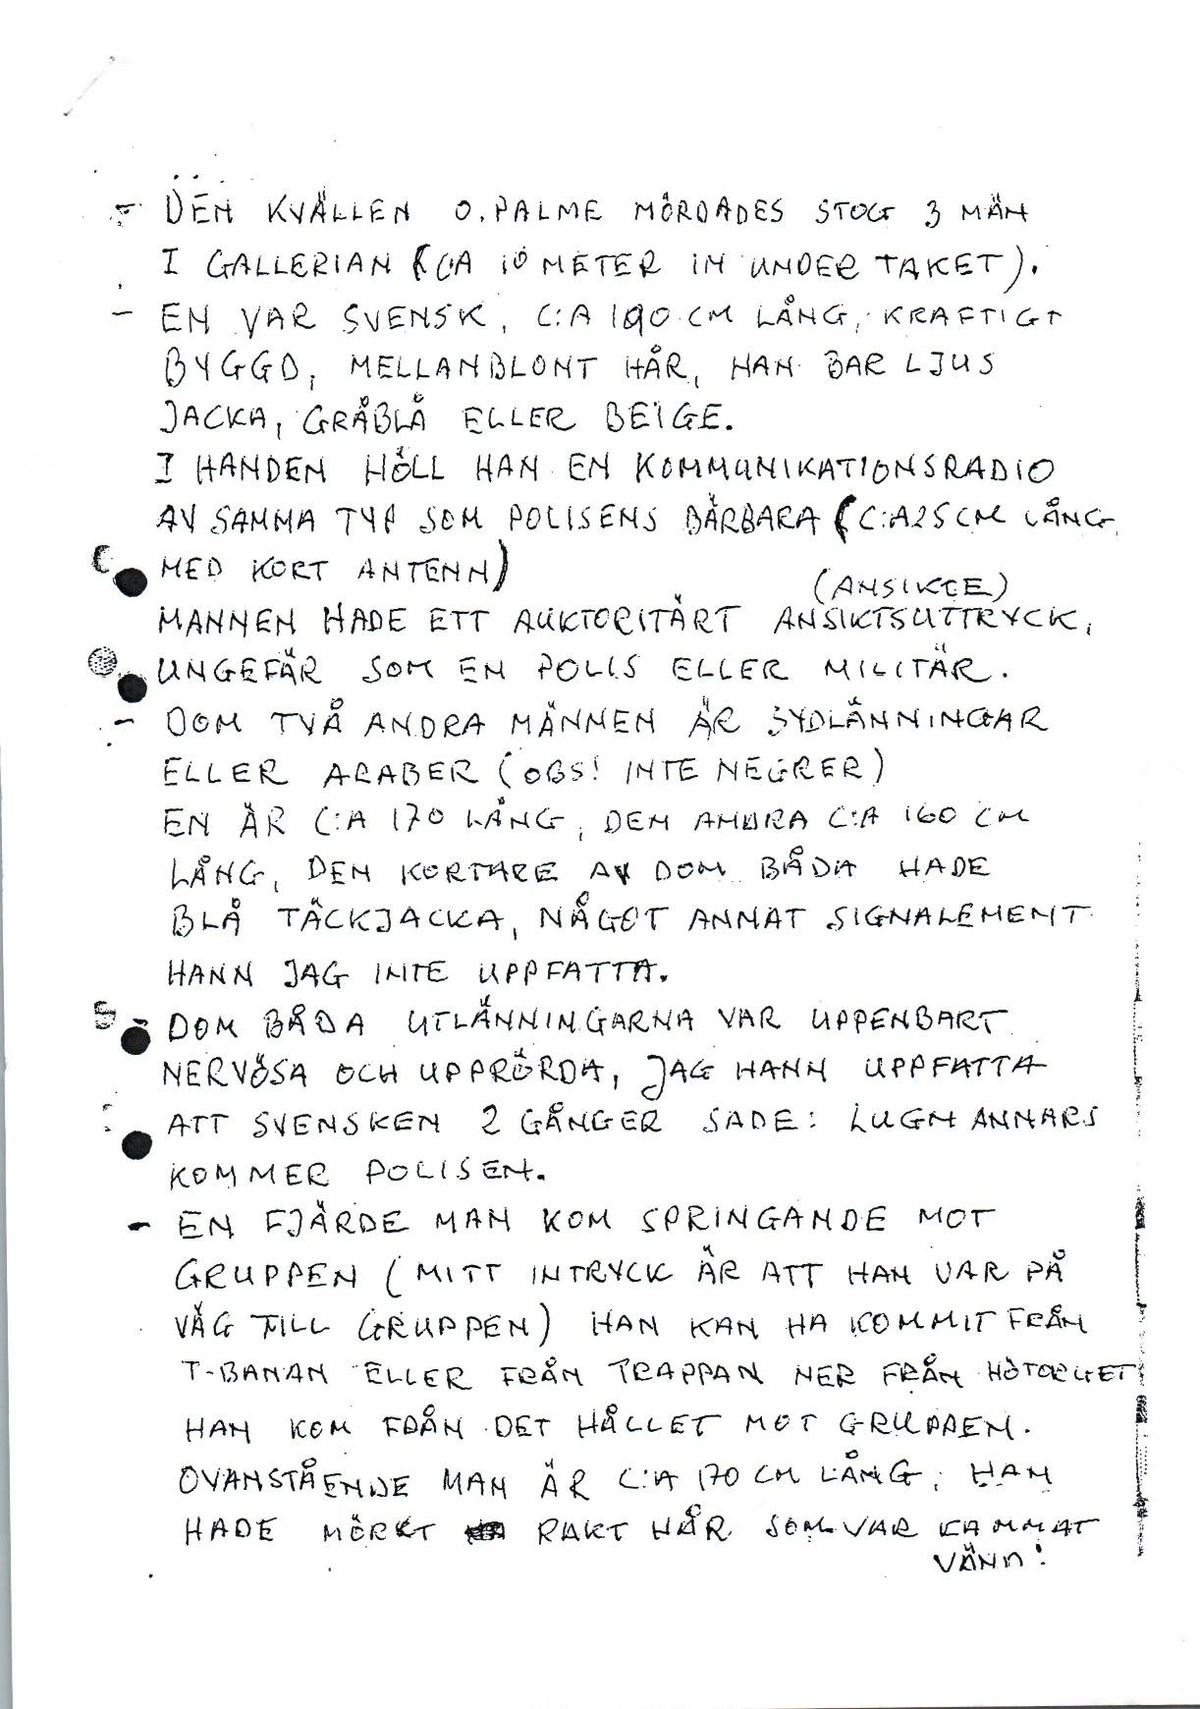 Pol-1986-03-27 EEE2815-00 Iakttagelser-Gallerian.pdf